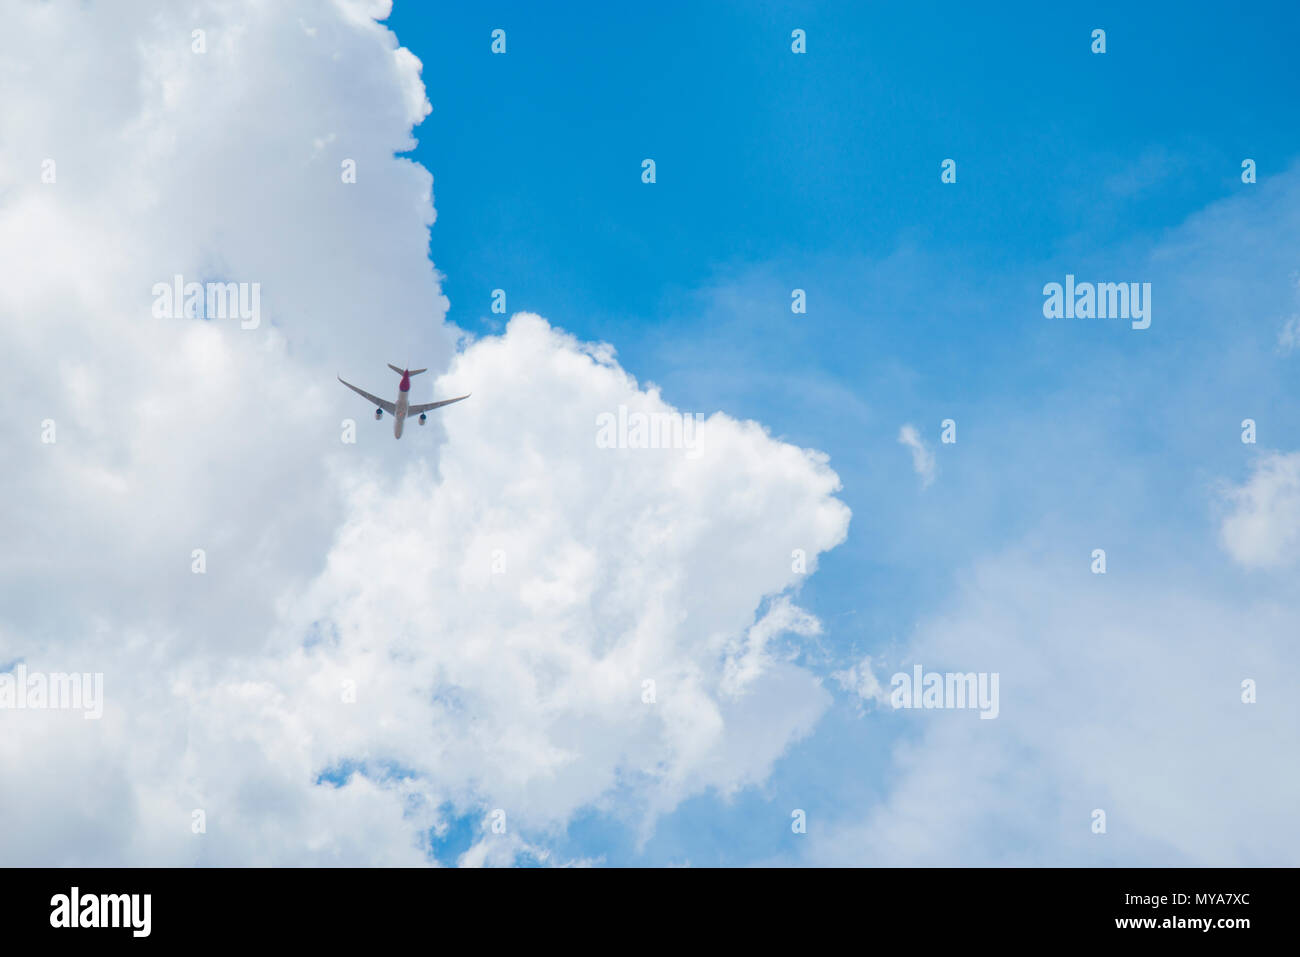 Plane flying across cloudy sky. Stock Photo